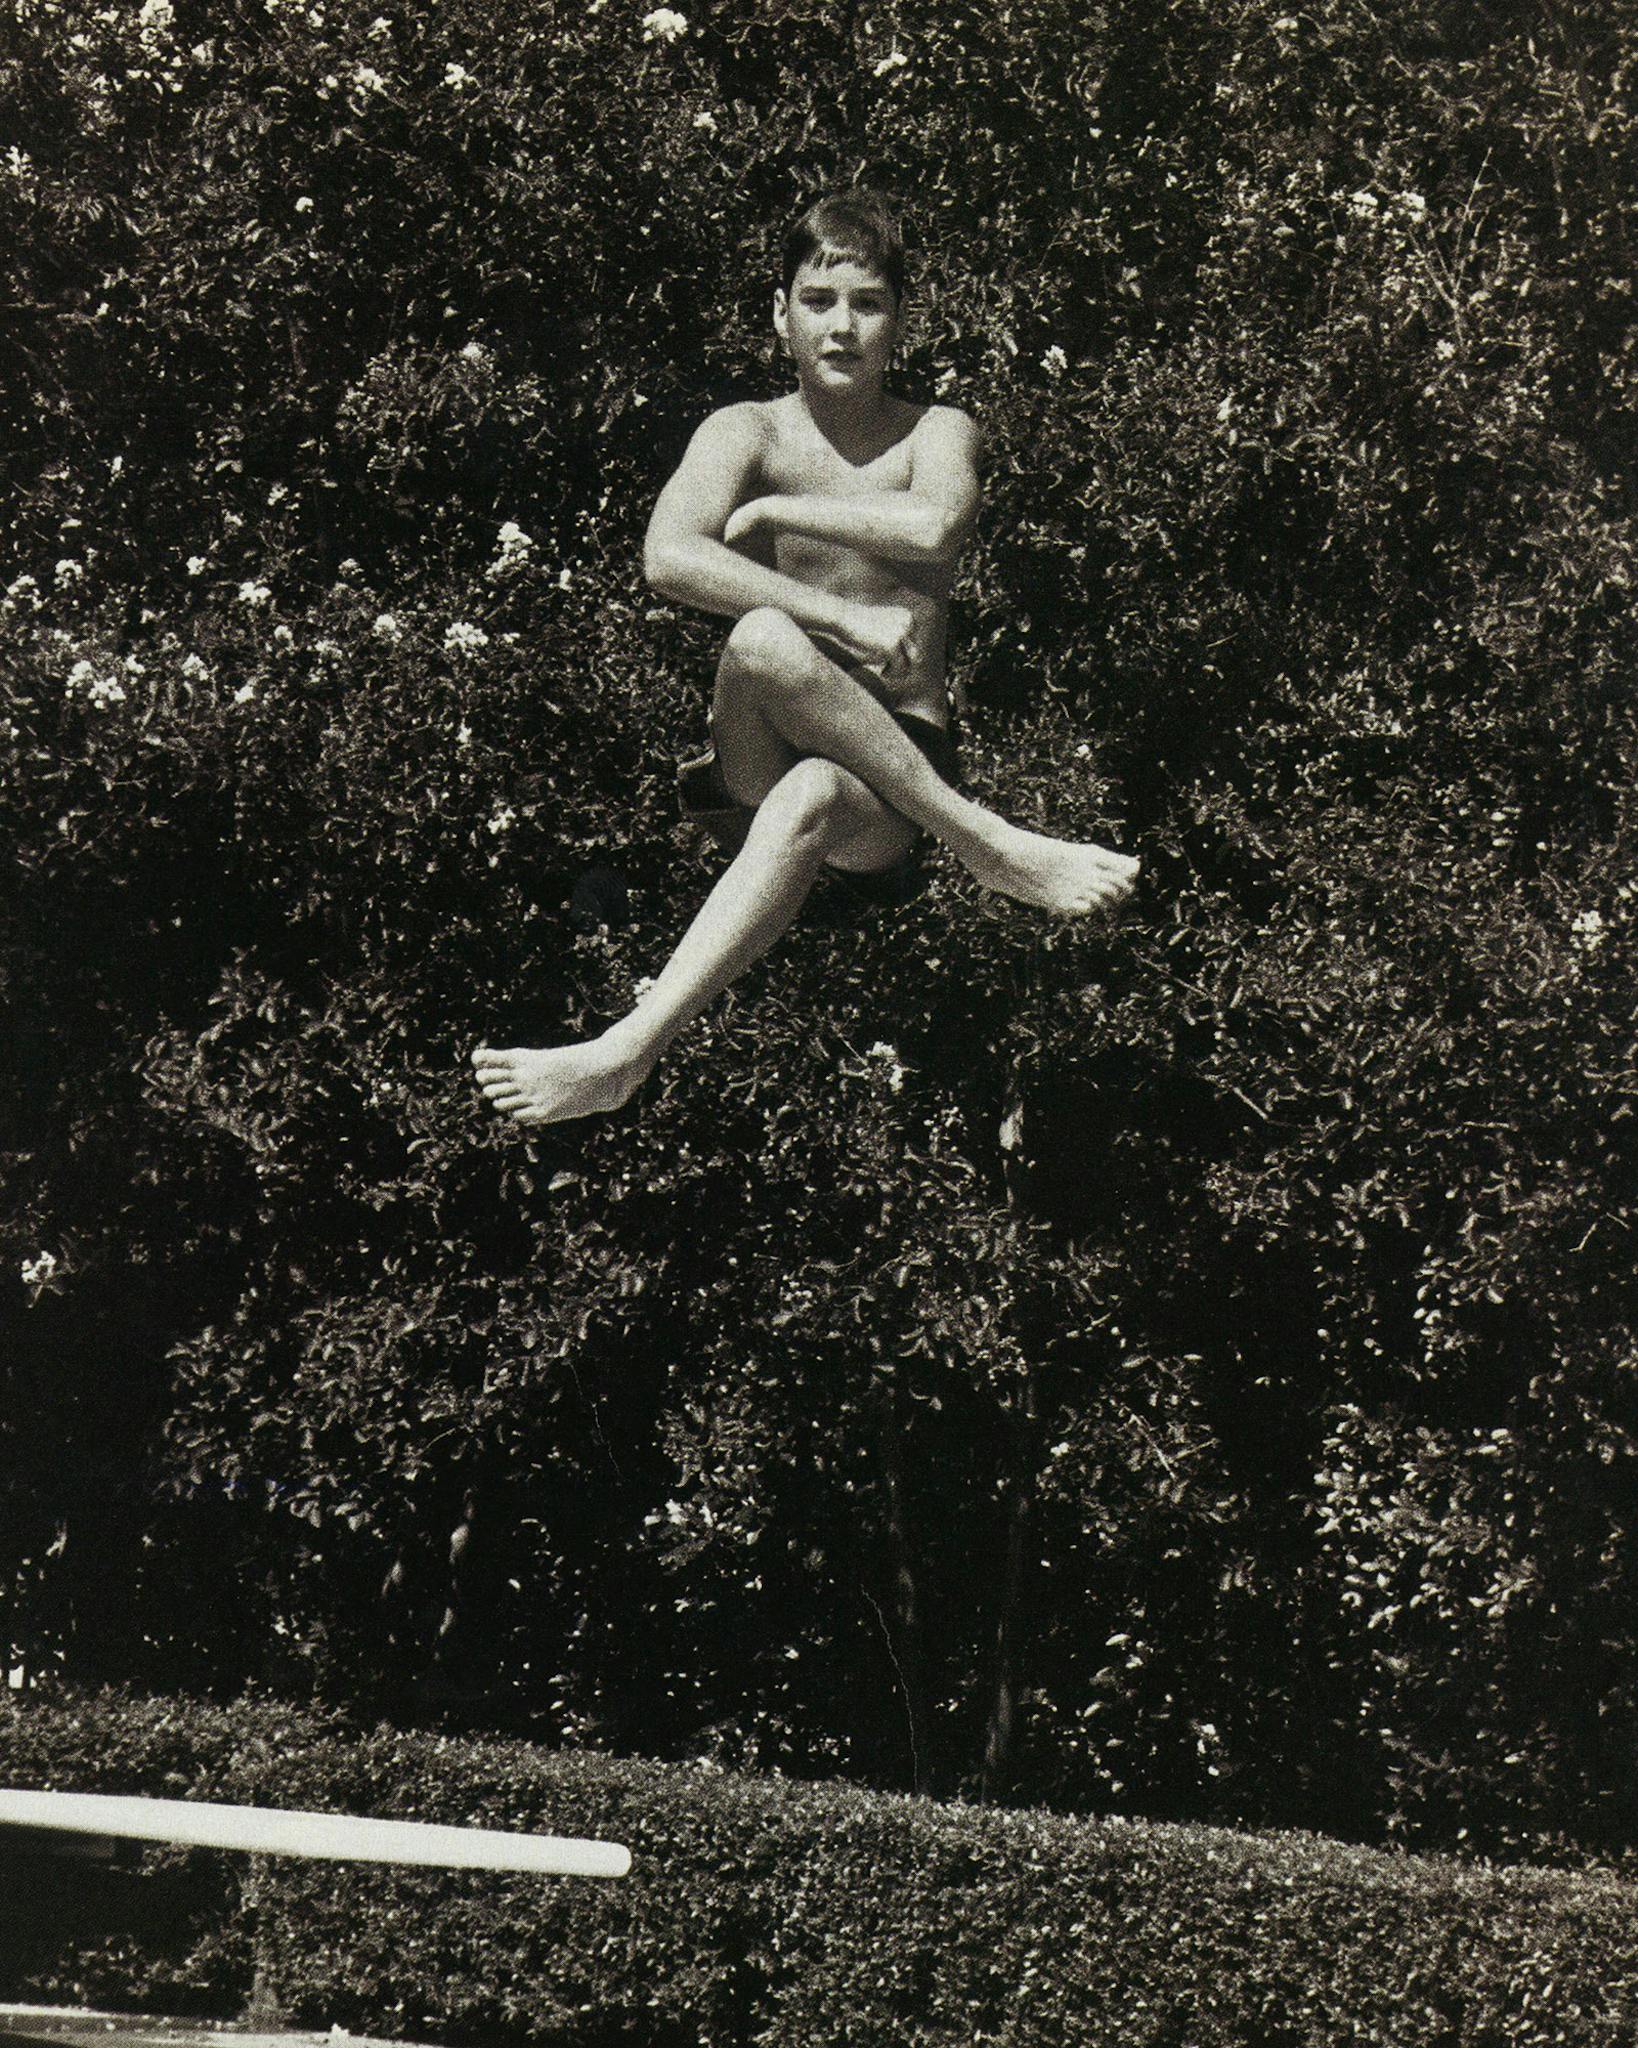 Luke Wilson jumping into a pool in midair.